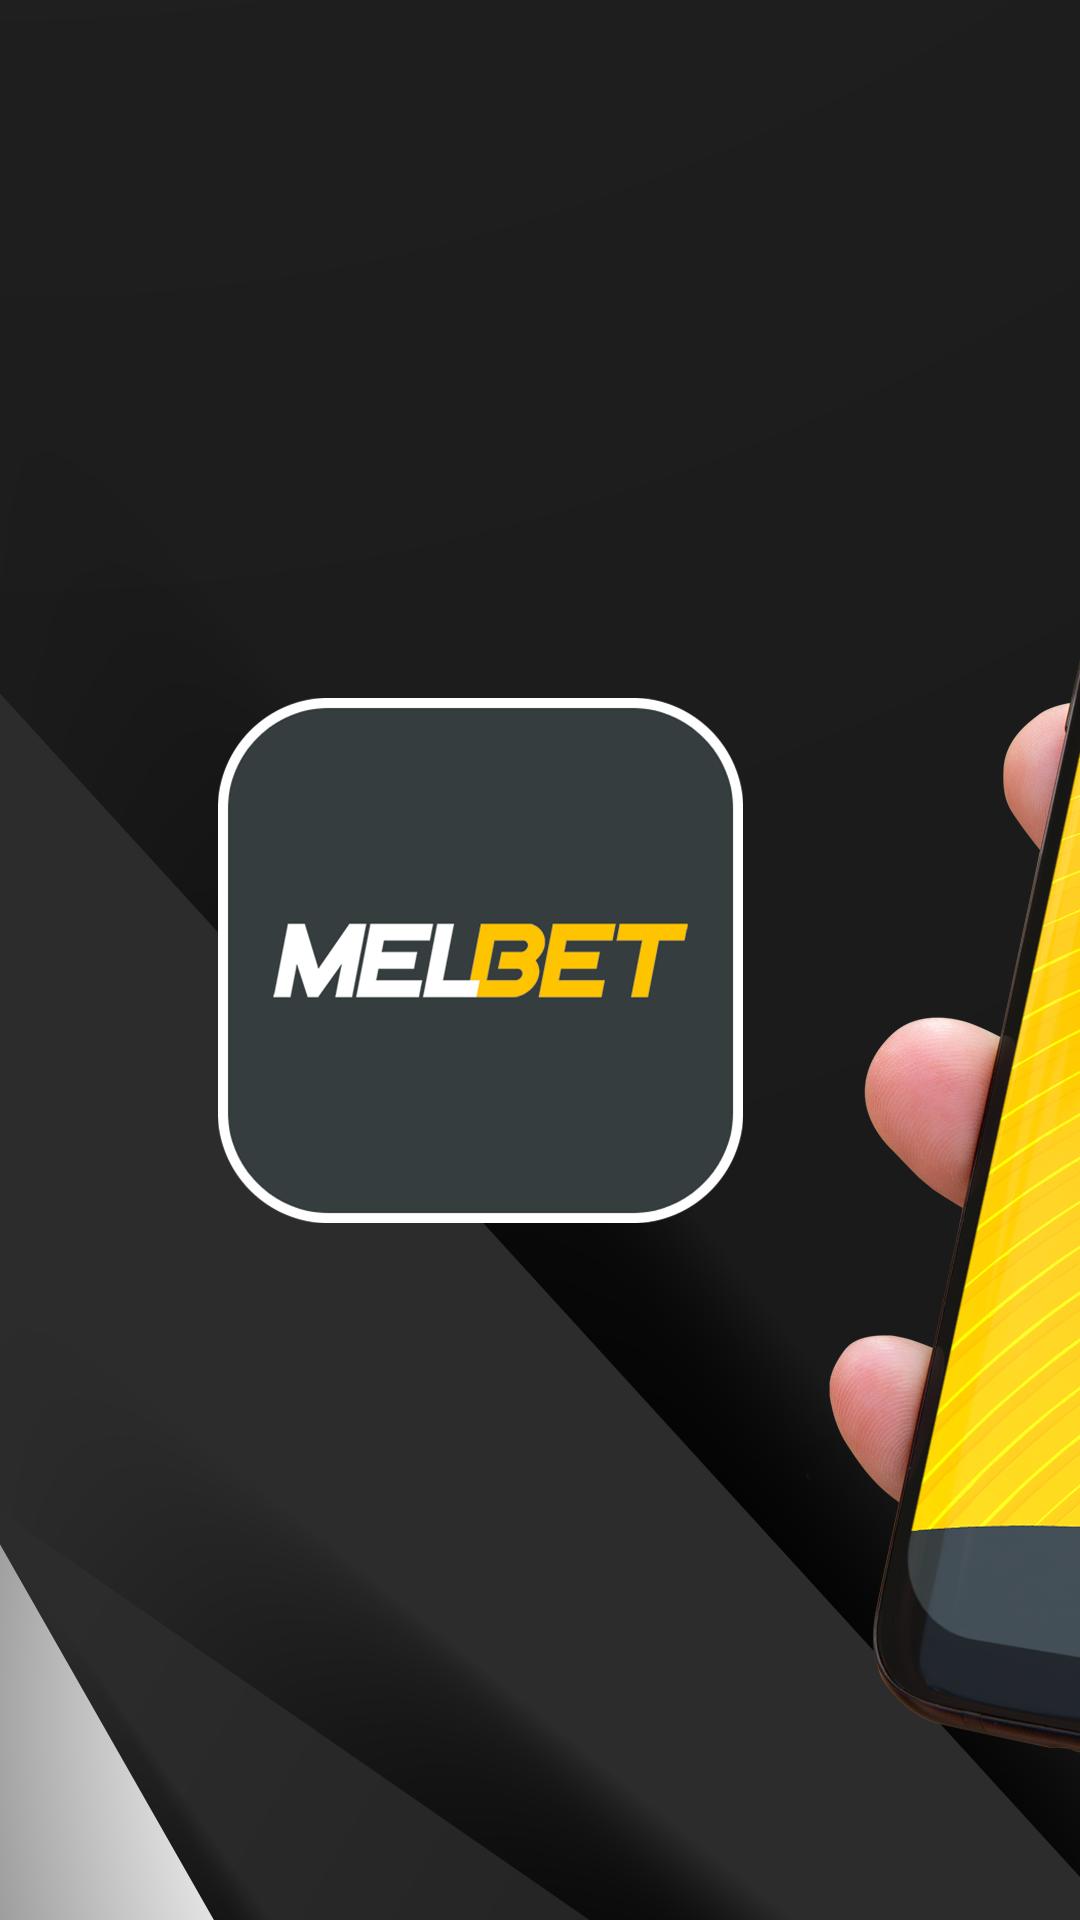 Melbet Promo Code Hong Kong - Use the NEWBONUS code to get $130 Bonus